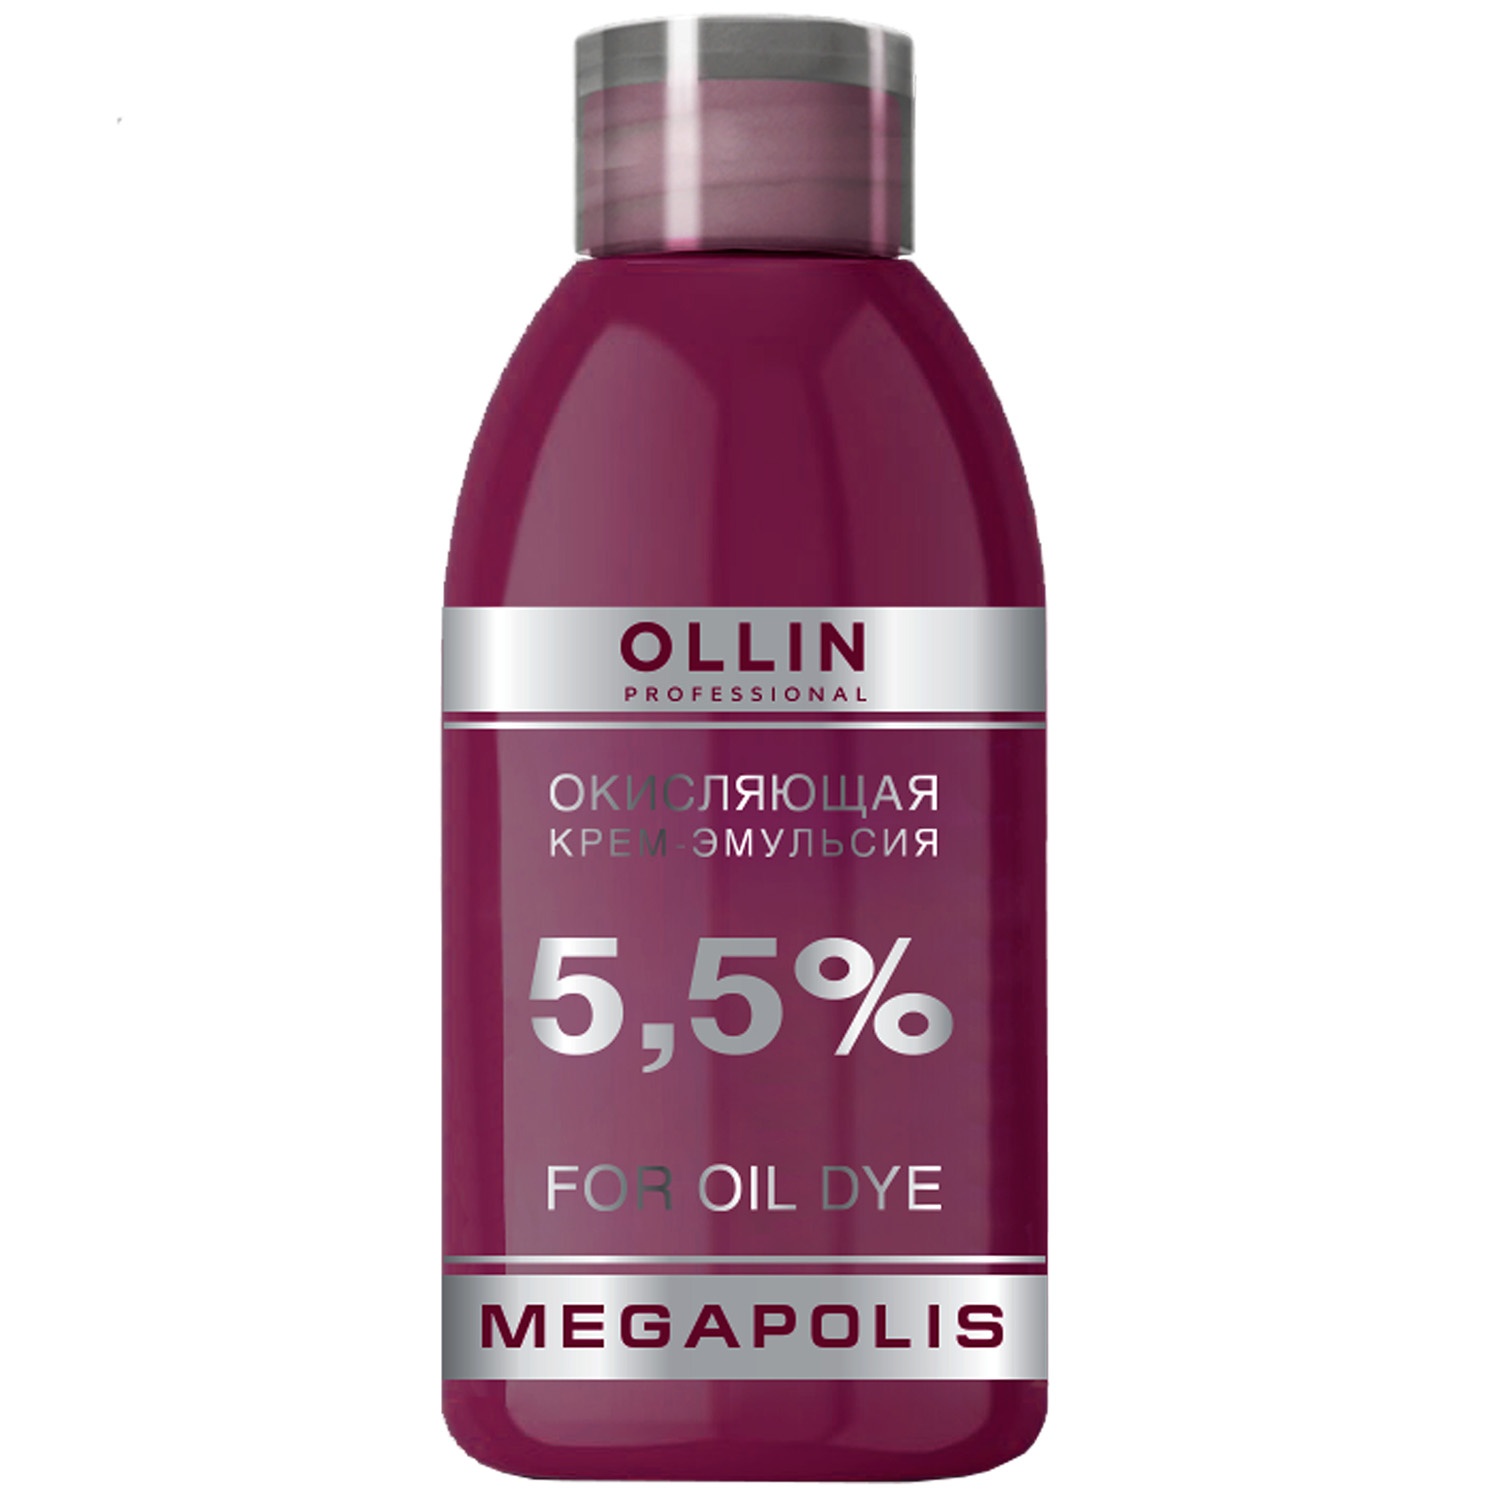 Ollin Professional Окисляющая крем-эмульсия 5,5%, 75 мл (Ollin Professional, Megapolis) окисляющая крем эмульсия megapolis 2 7% 500 мл